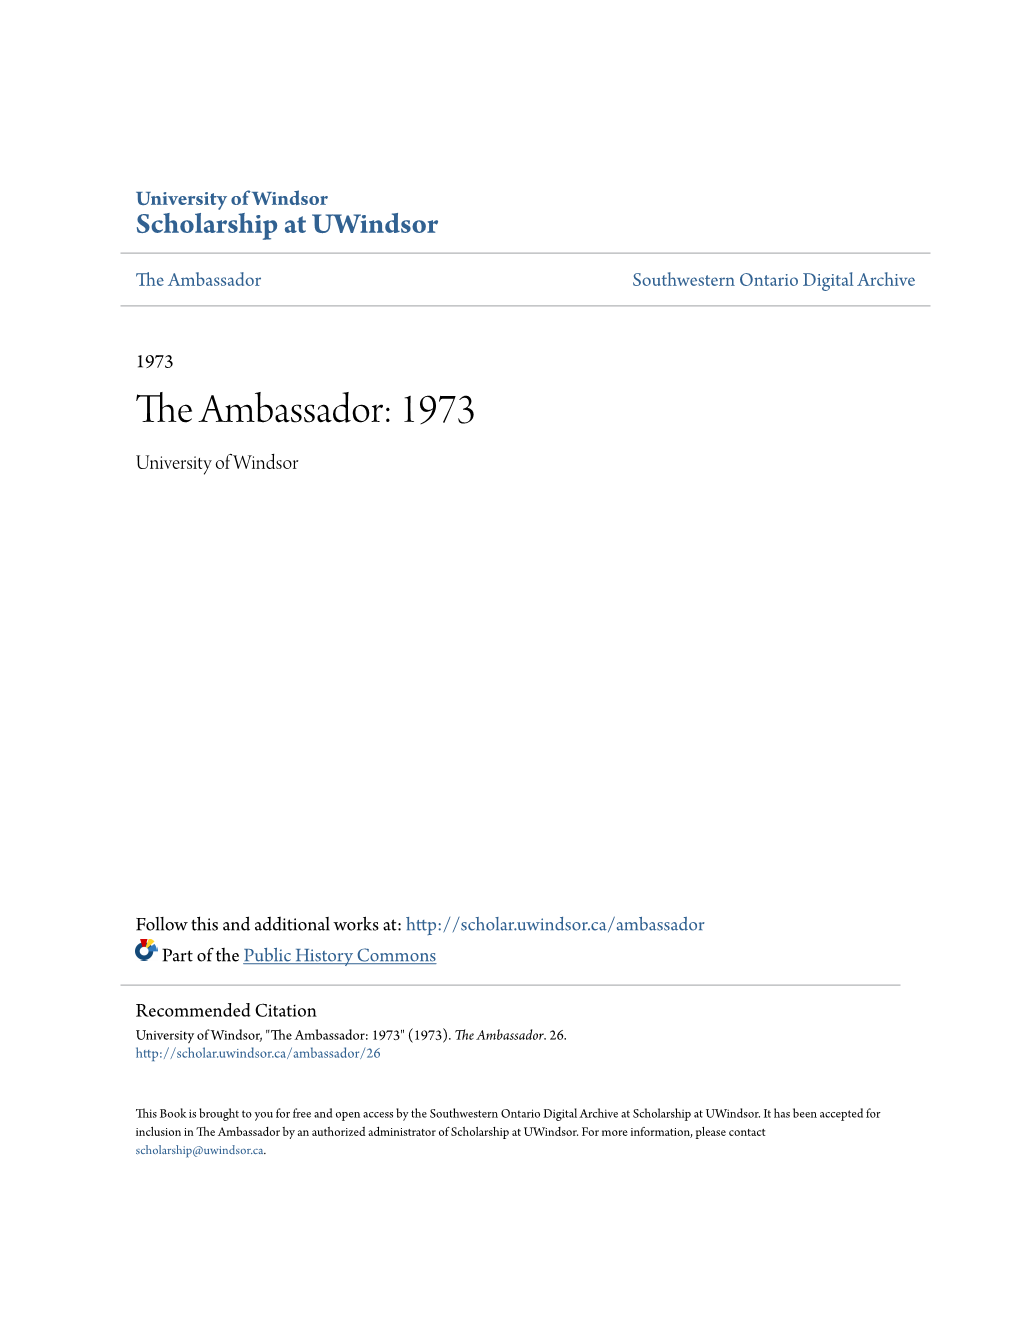 The Ambassador: 1973 University of Windsor